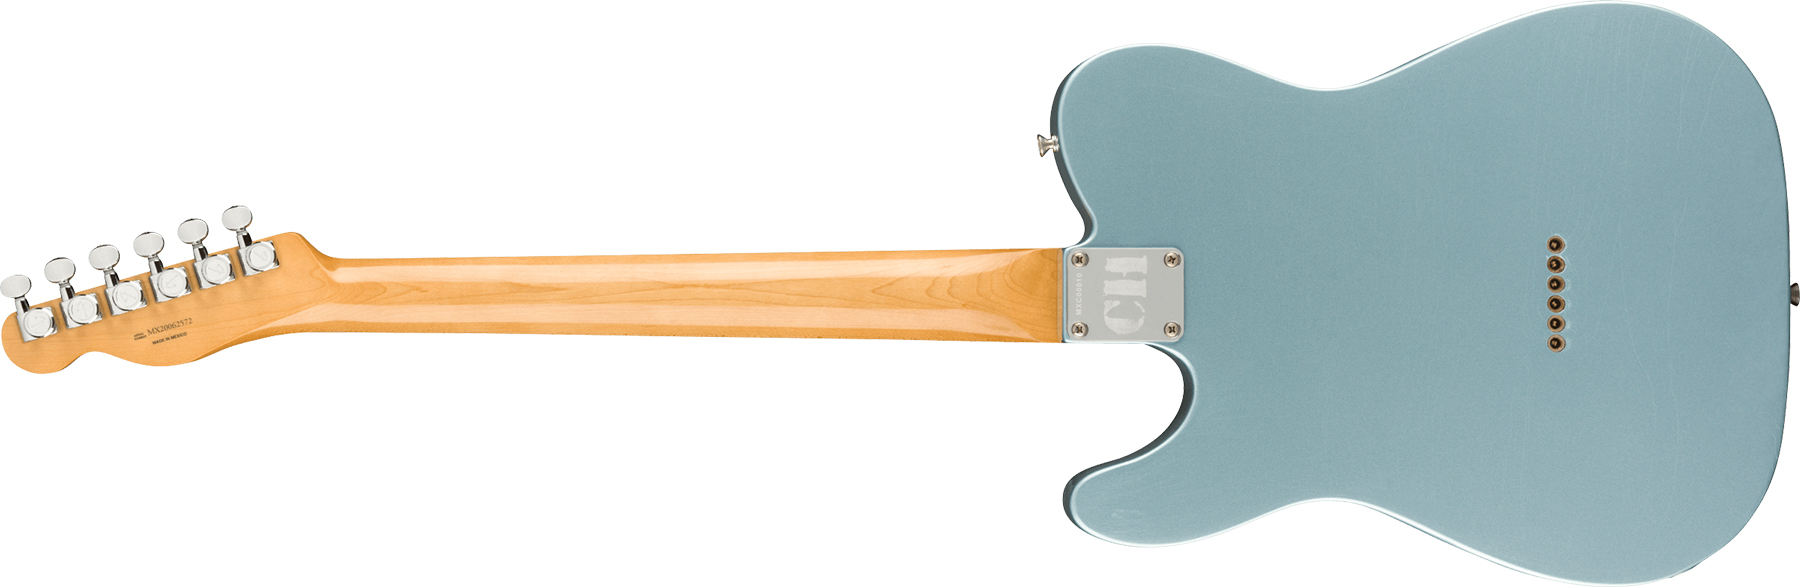 Fender Chrissie Hynde Tele Signature Mex Rw - Road Worn Faded Ice Blue Metallic - Tel shape electric guitar - Variation 1